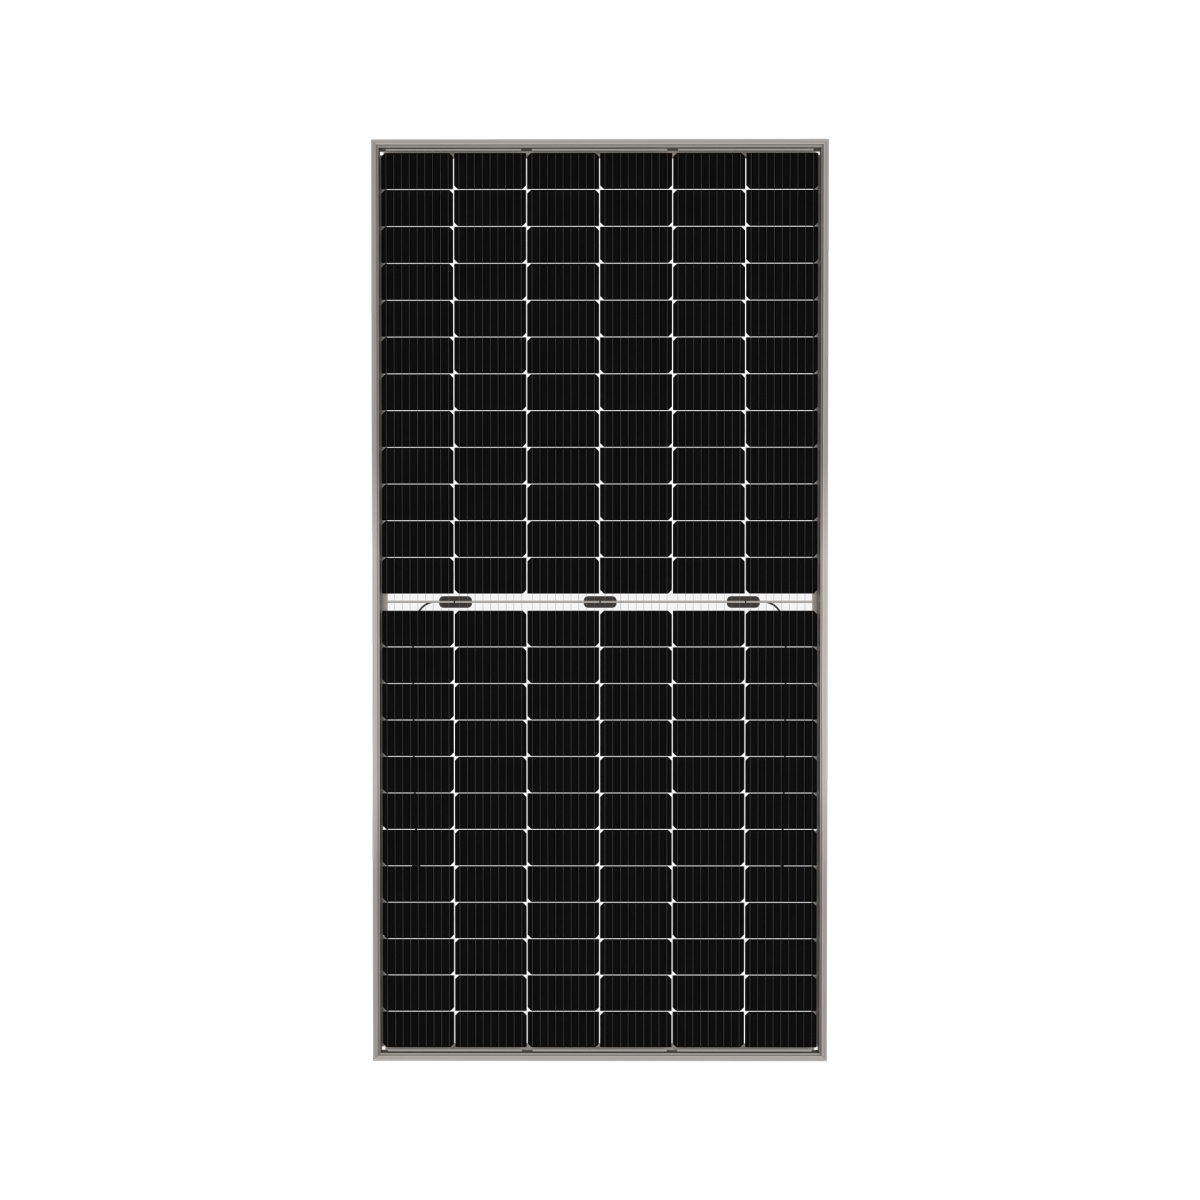 TommaTech 430 Watt 144 Percmono Bifacial Half-Cut Multi Busbar Solar Panel